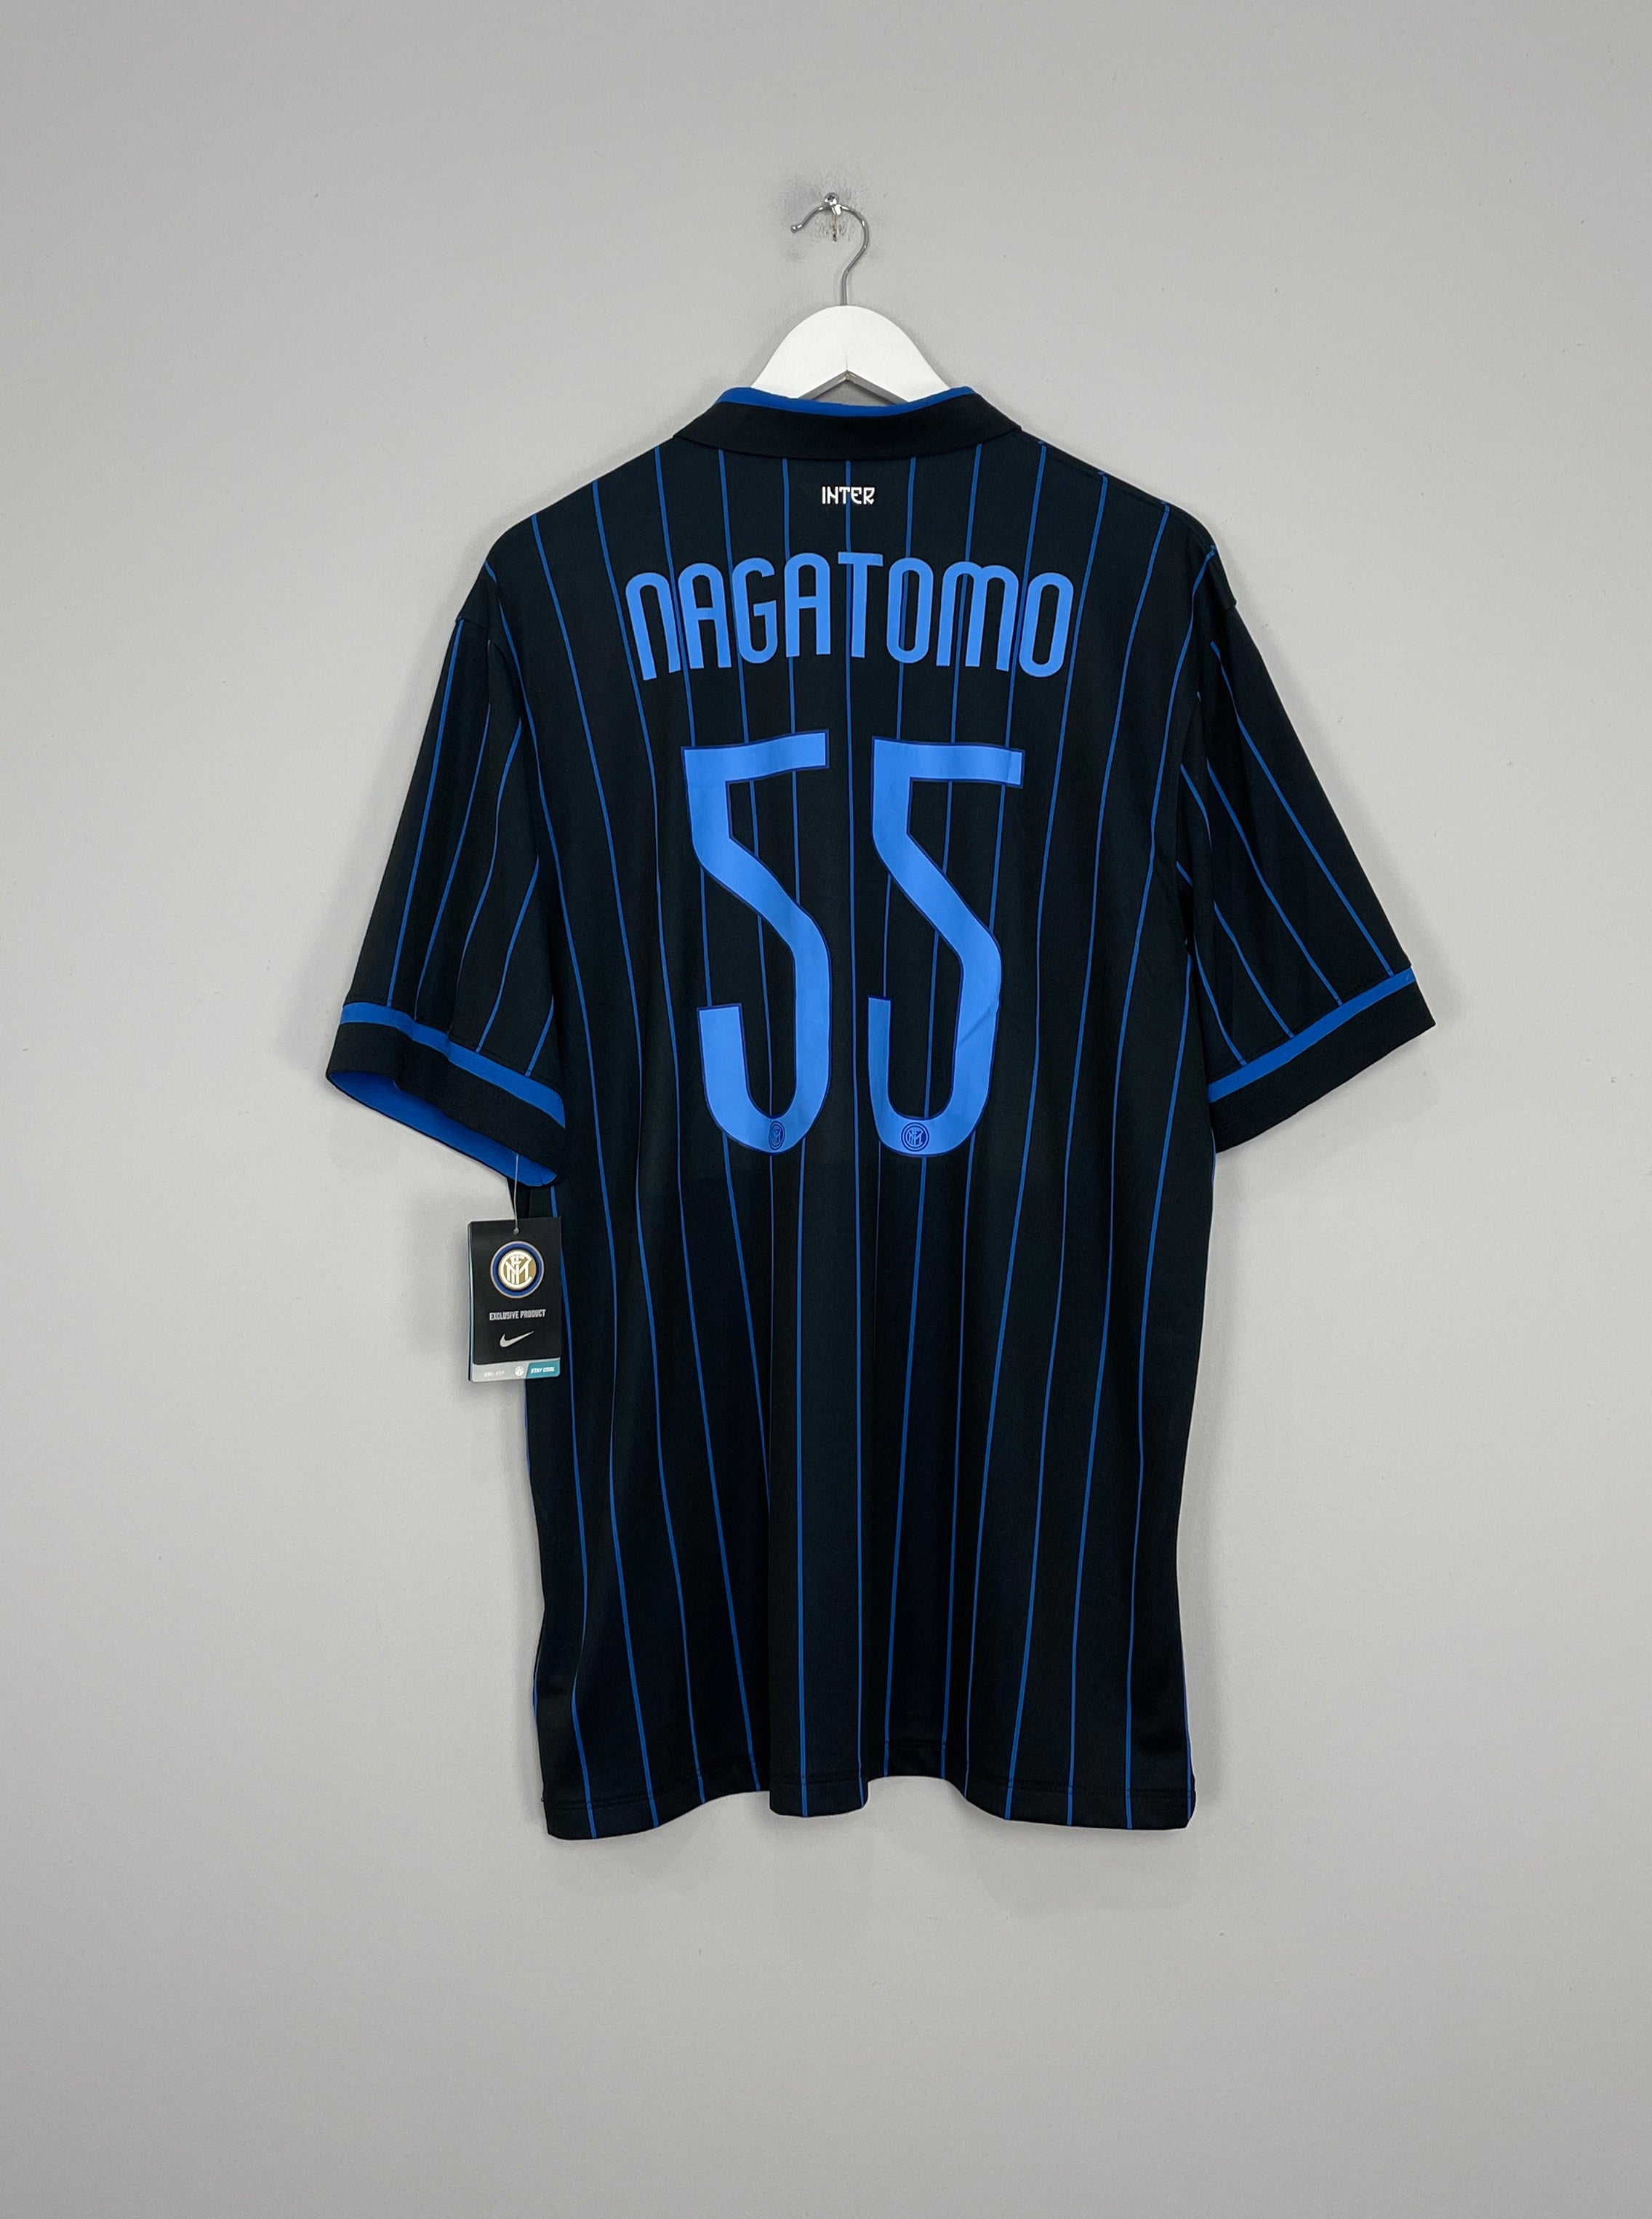 Inter Milan No55 Nagatomo Home Jersey